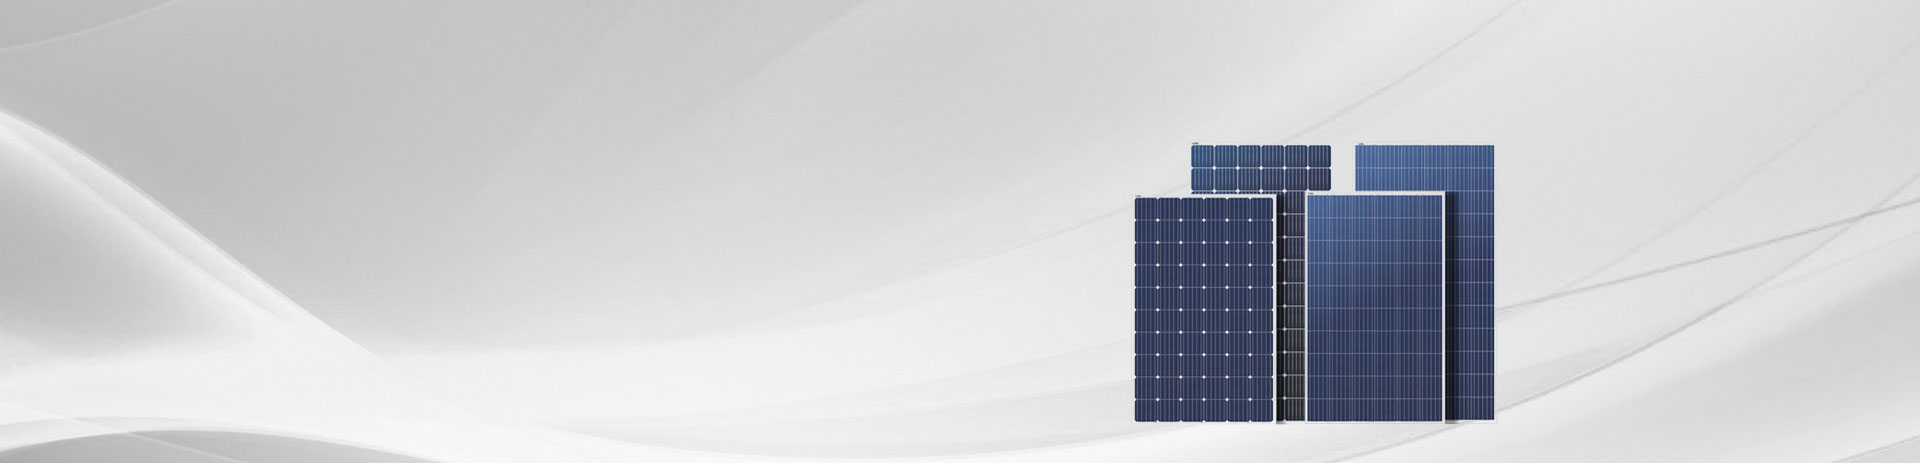 Standard Solar Panel